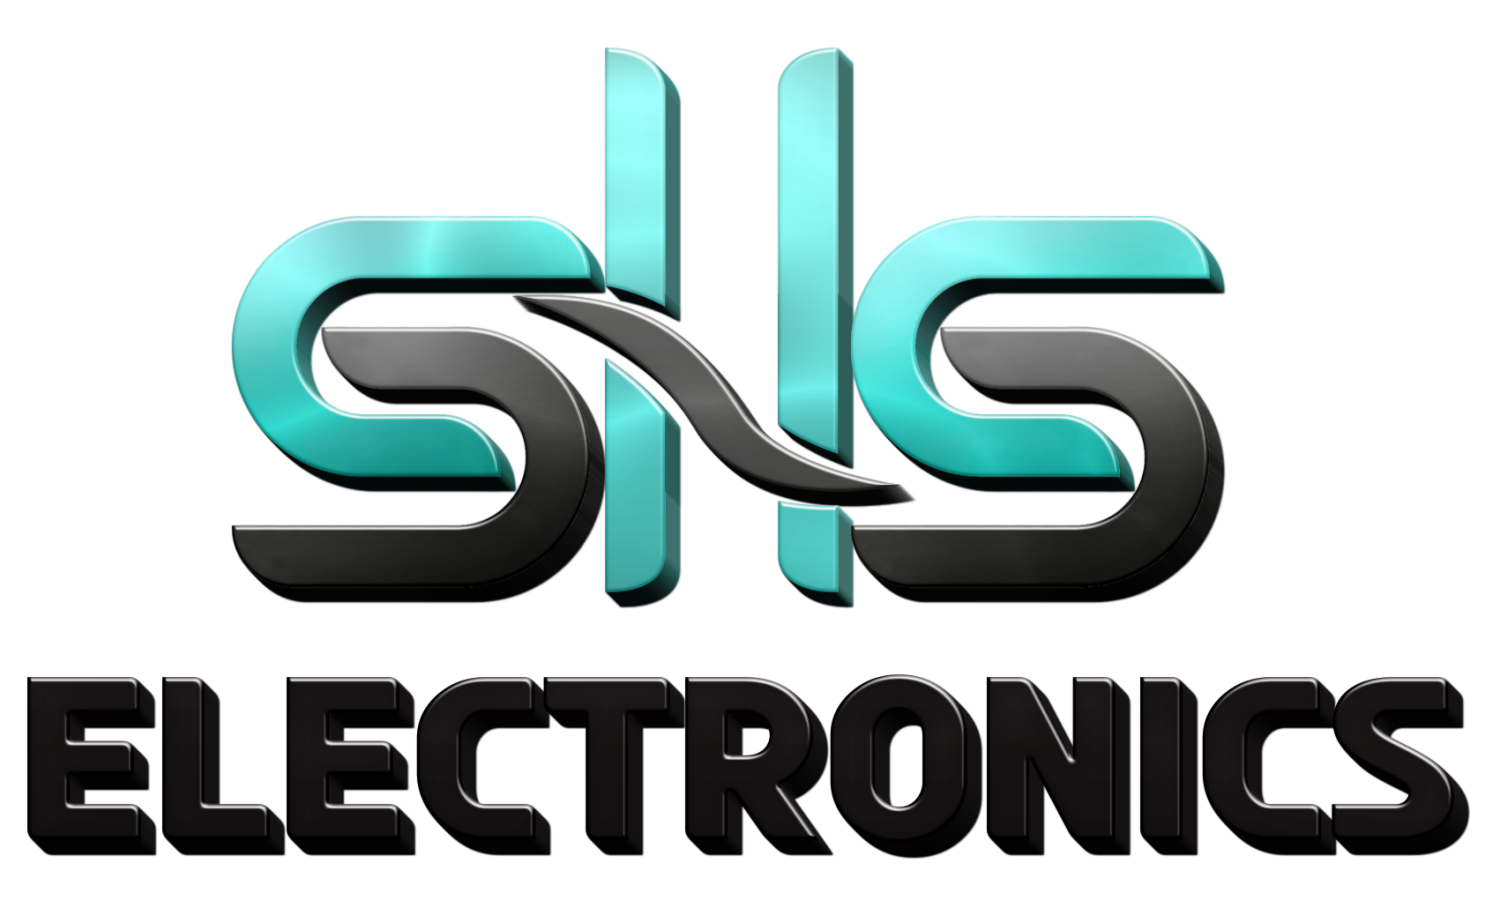 SHS Electronics